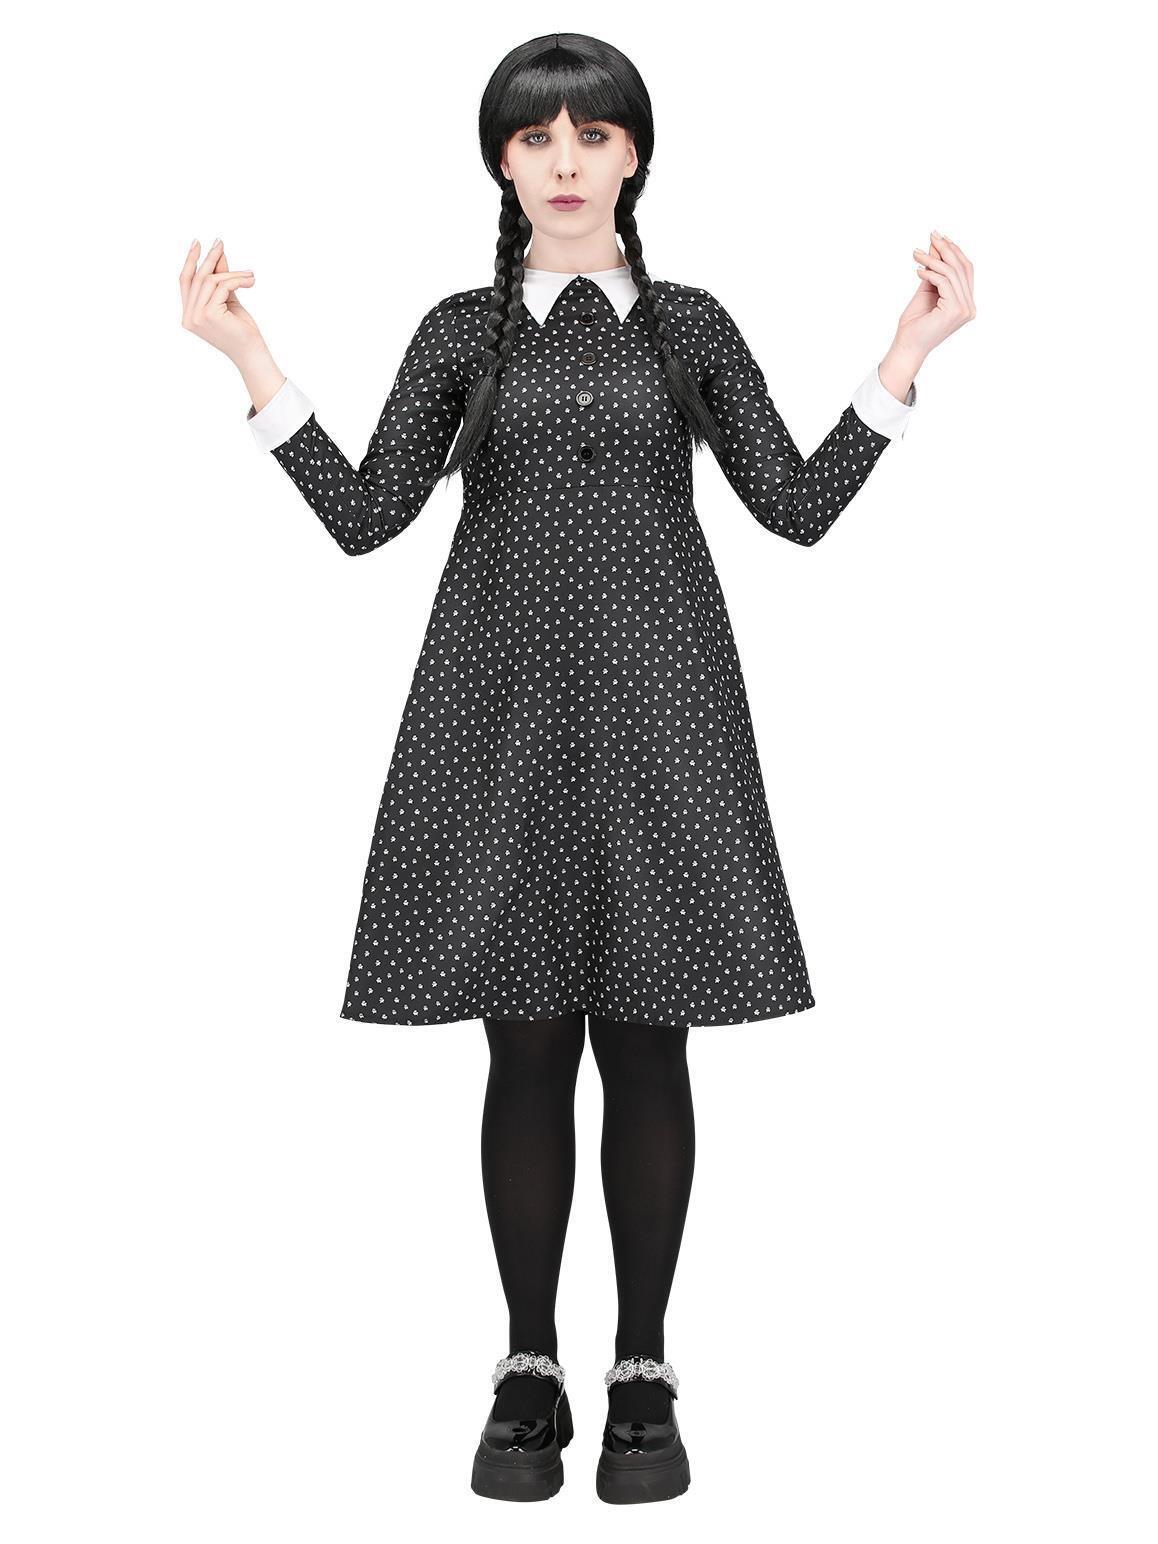 Gothic School Girl Adult Costume